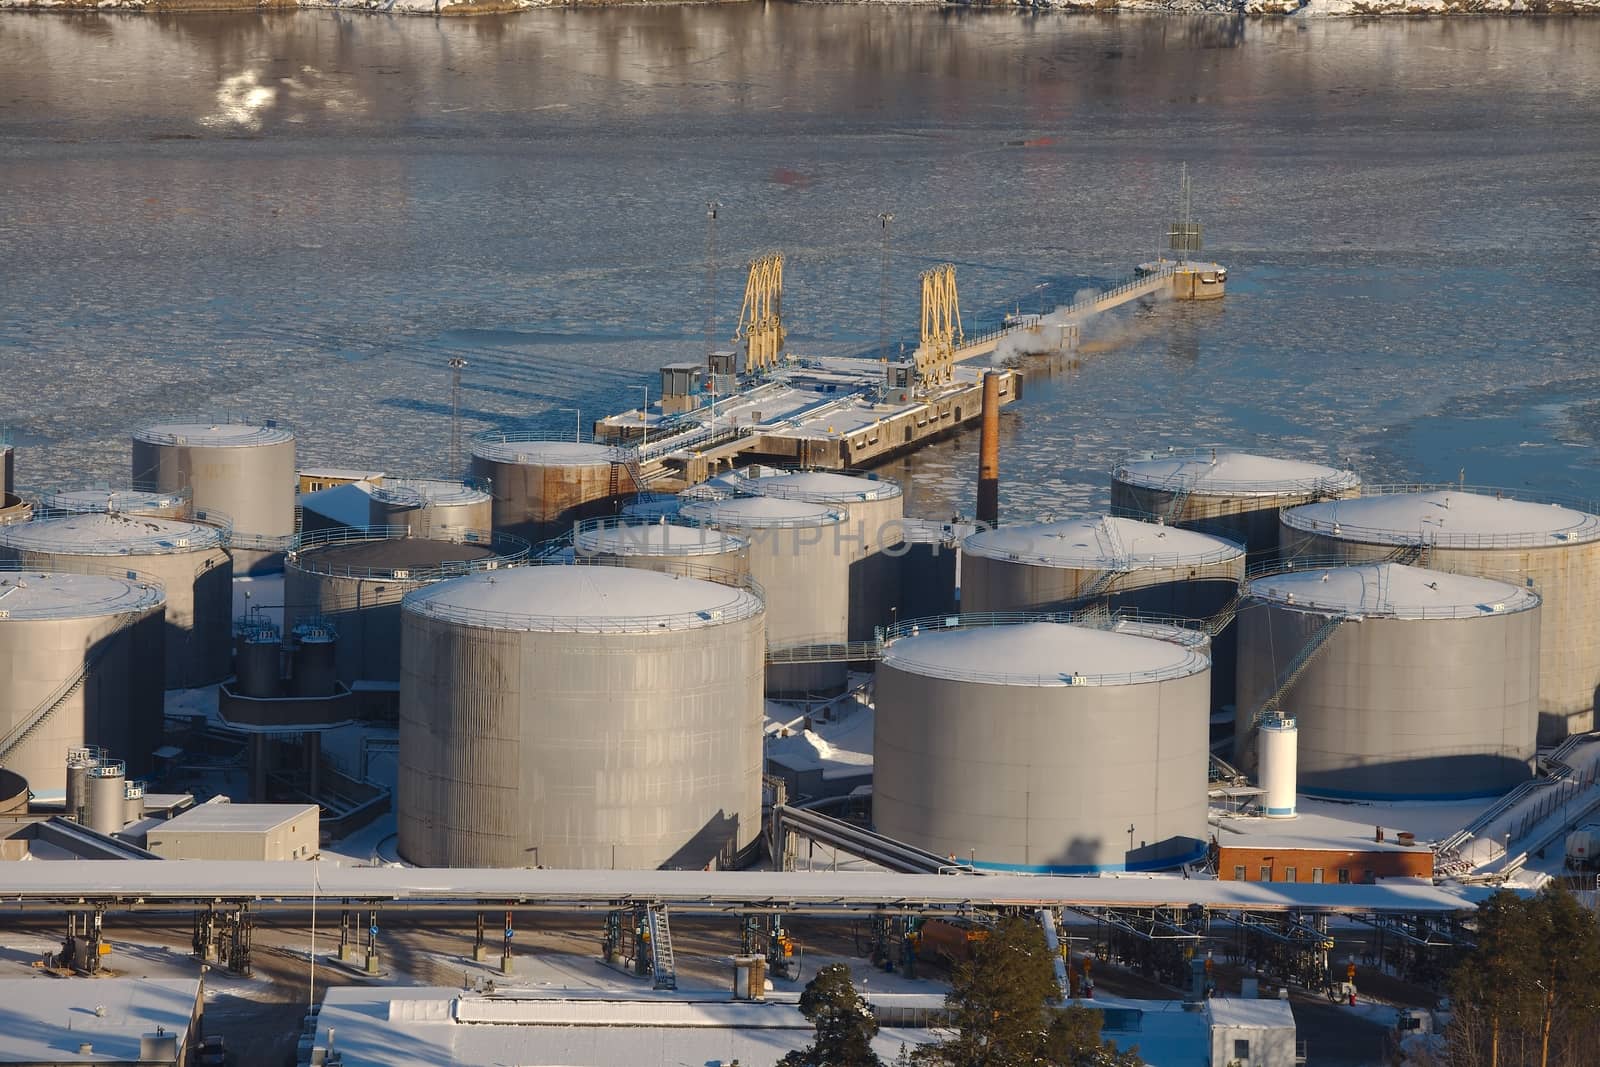 Big oil silos in a dock